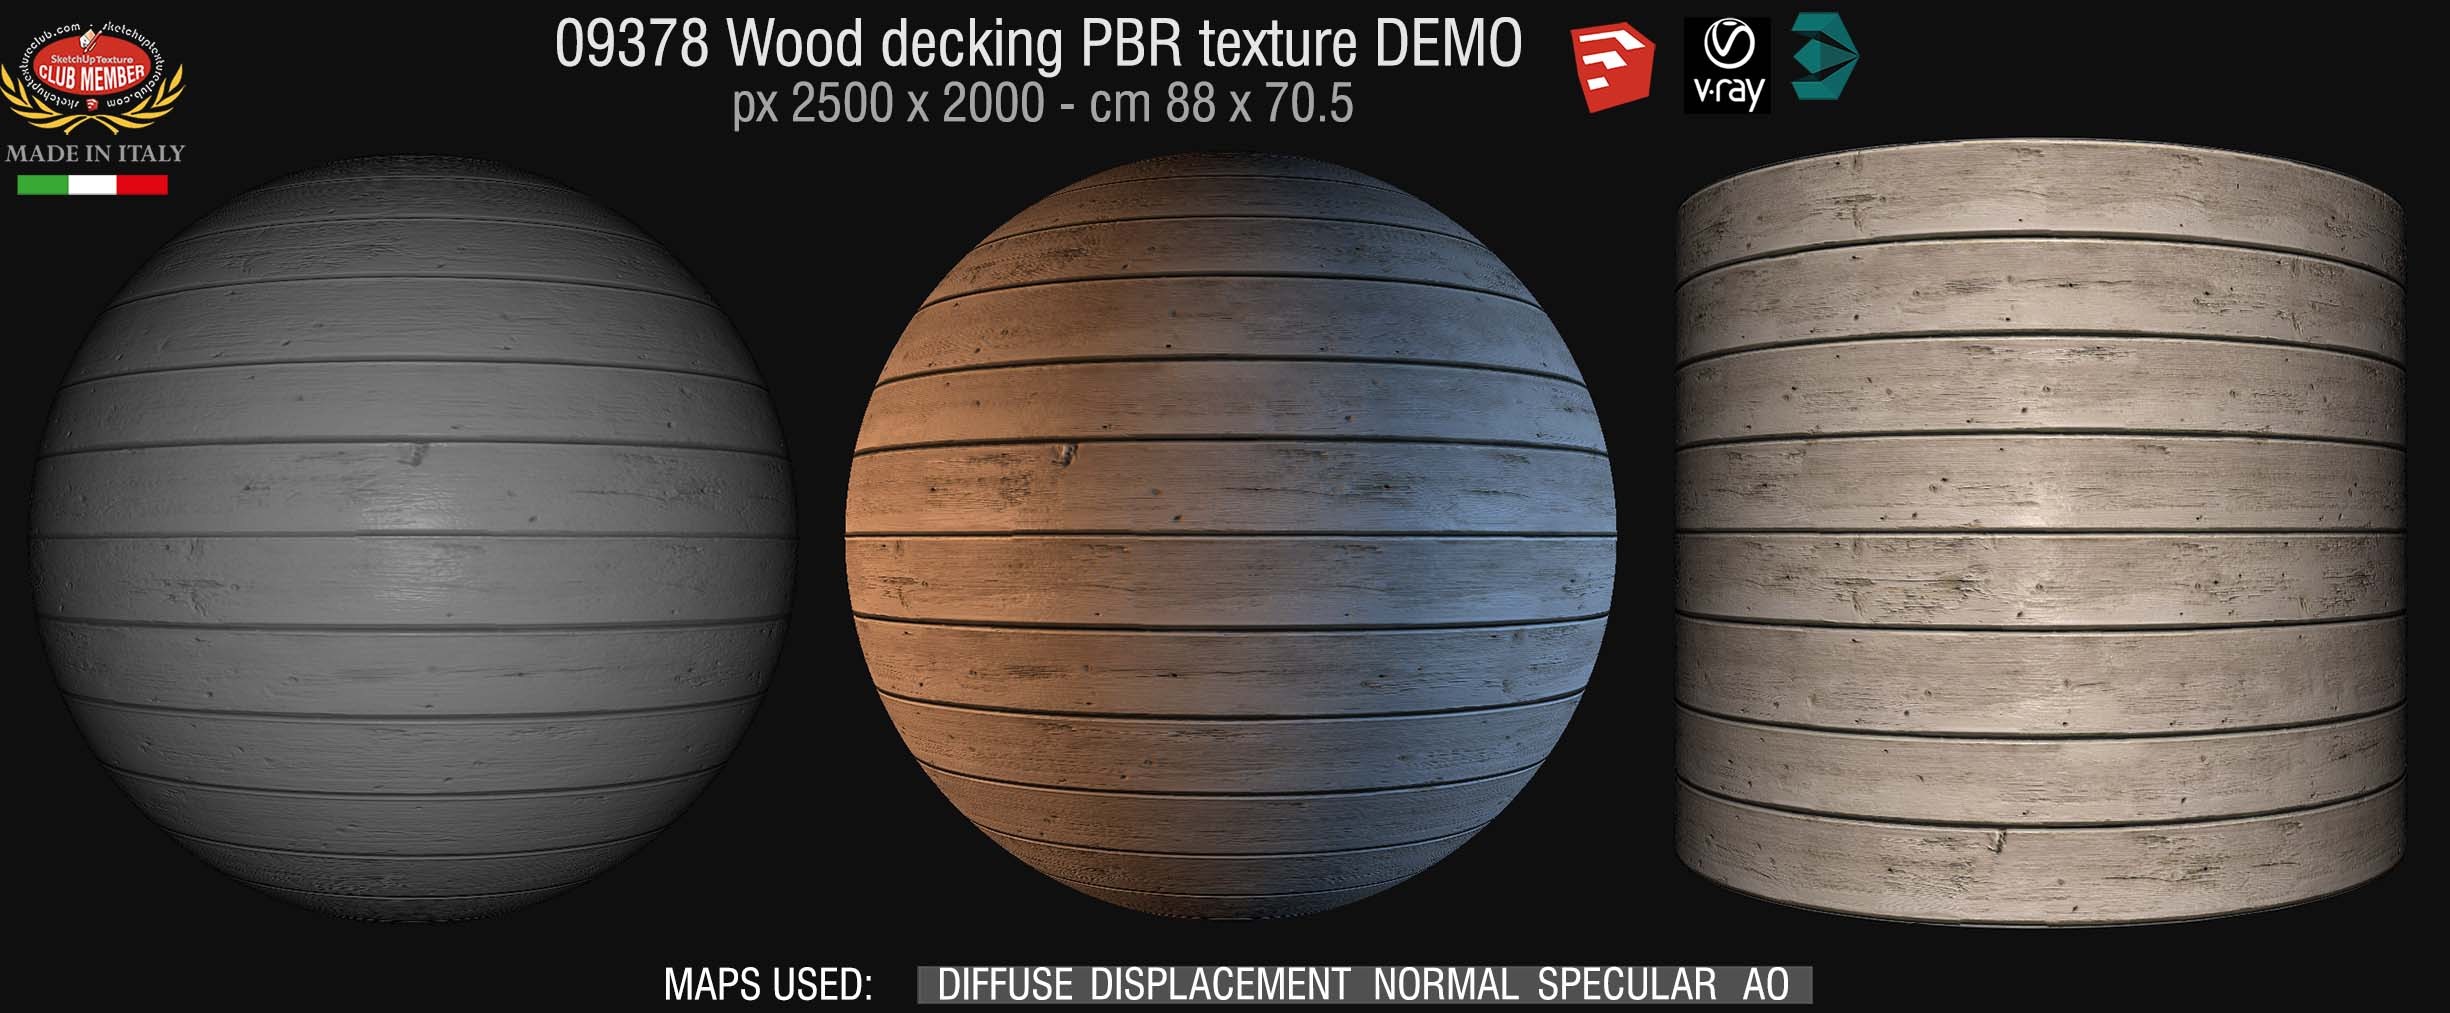 09378 Wood decking PBR texture seamless DEMO